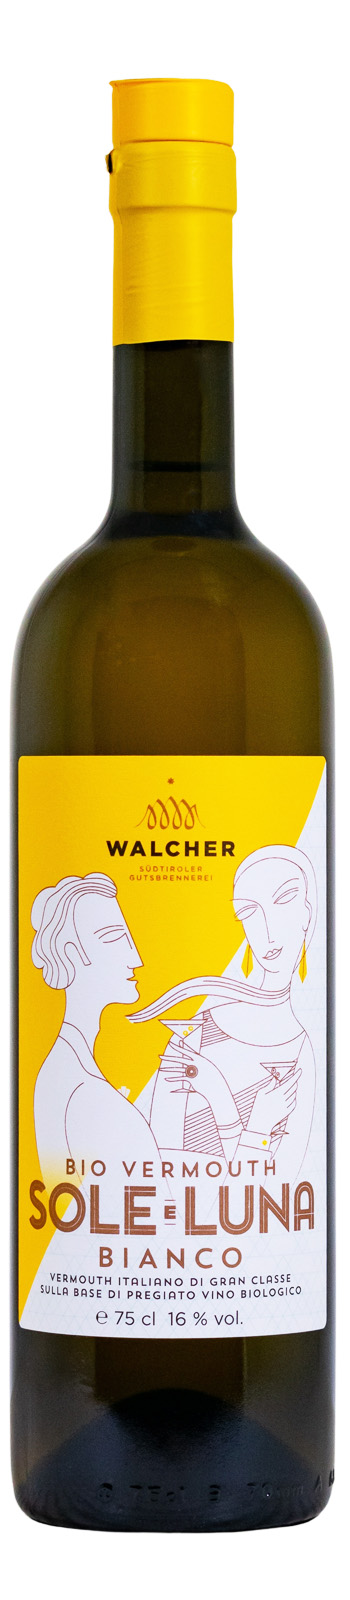 Walcher Sole e Luna Bianco Vermouth - 0,75L 16% vol